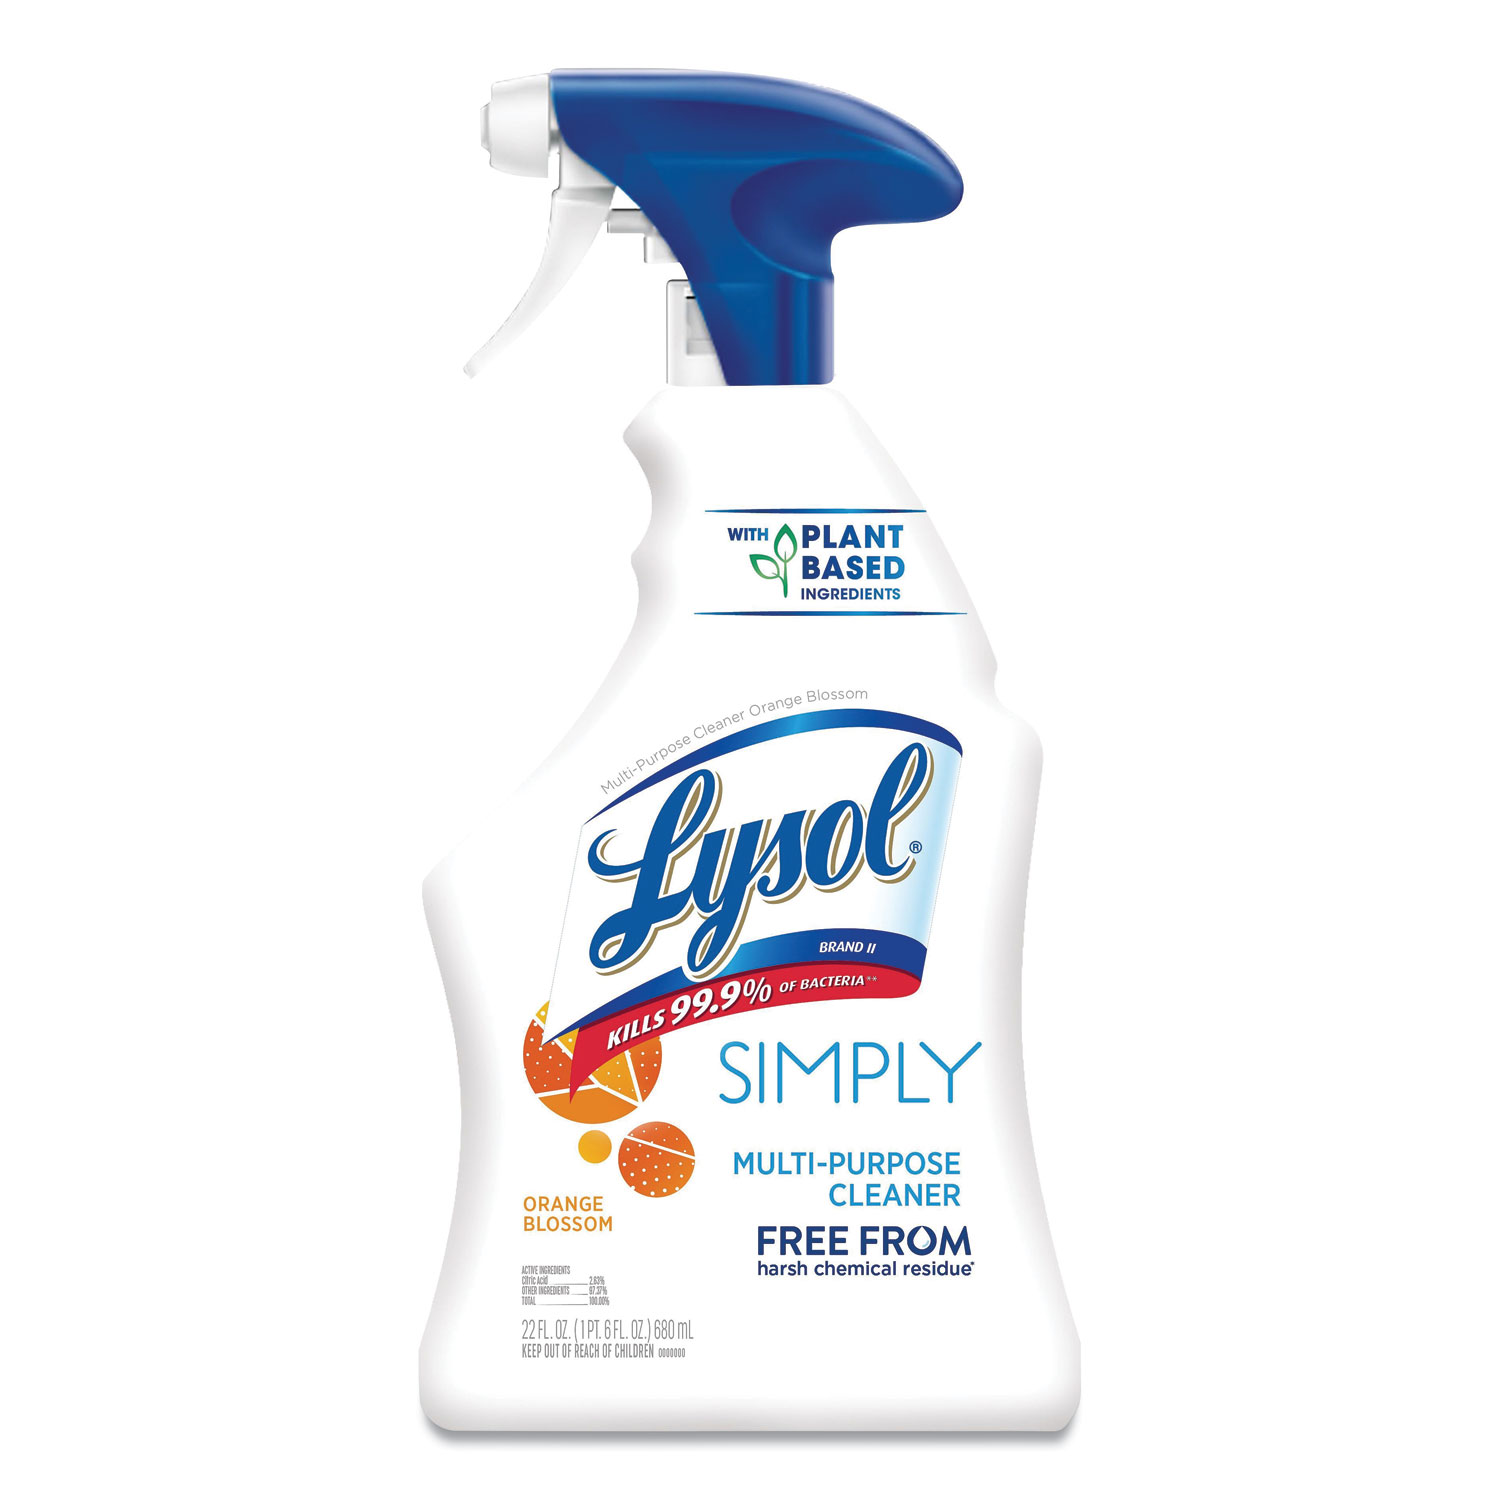  LYSOL Brand II 19200-98019 Simply Multi-Purpose Cleaner, Orange Blossom, 22 oz Trigger Spray Bottle, 9/Carton (RAC98019) 